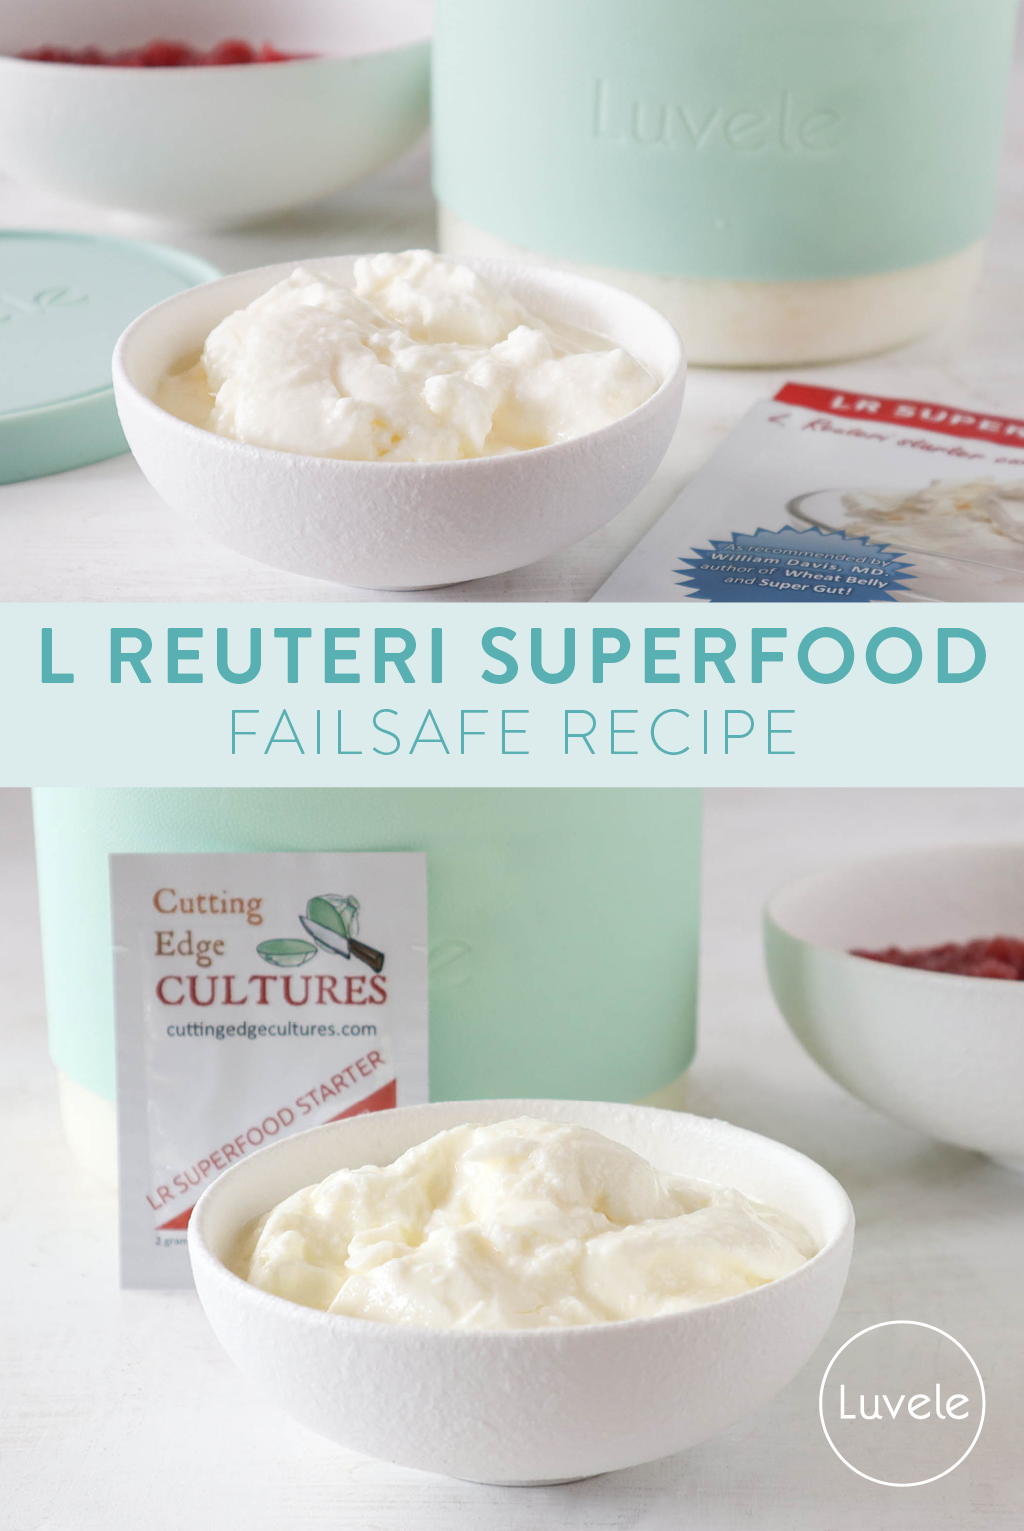 L Rueteri superfood yogurt recipe